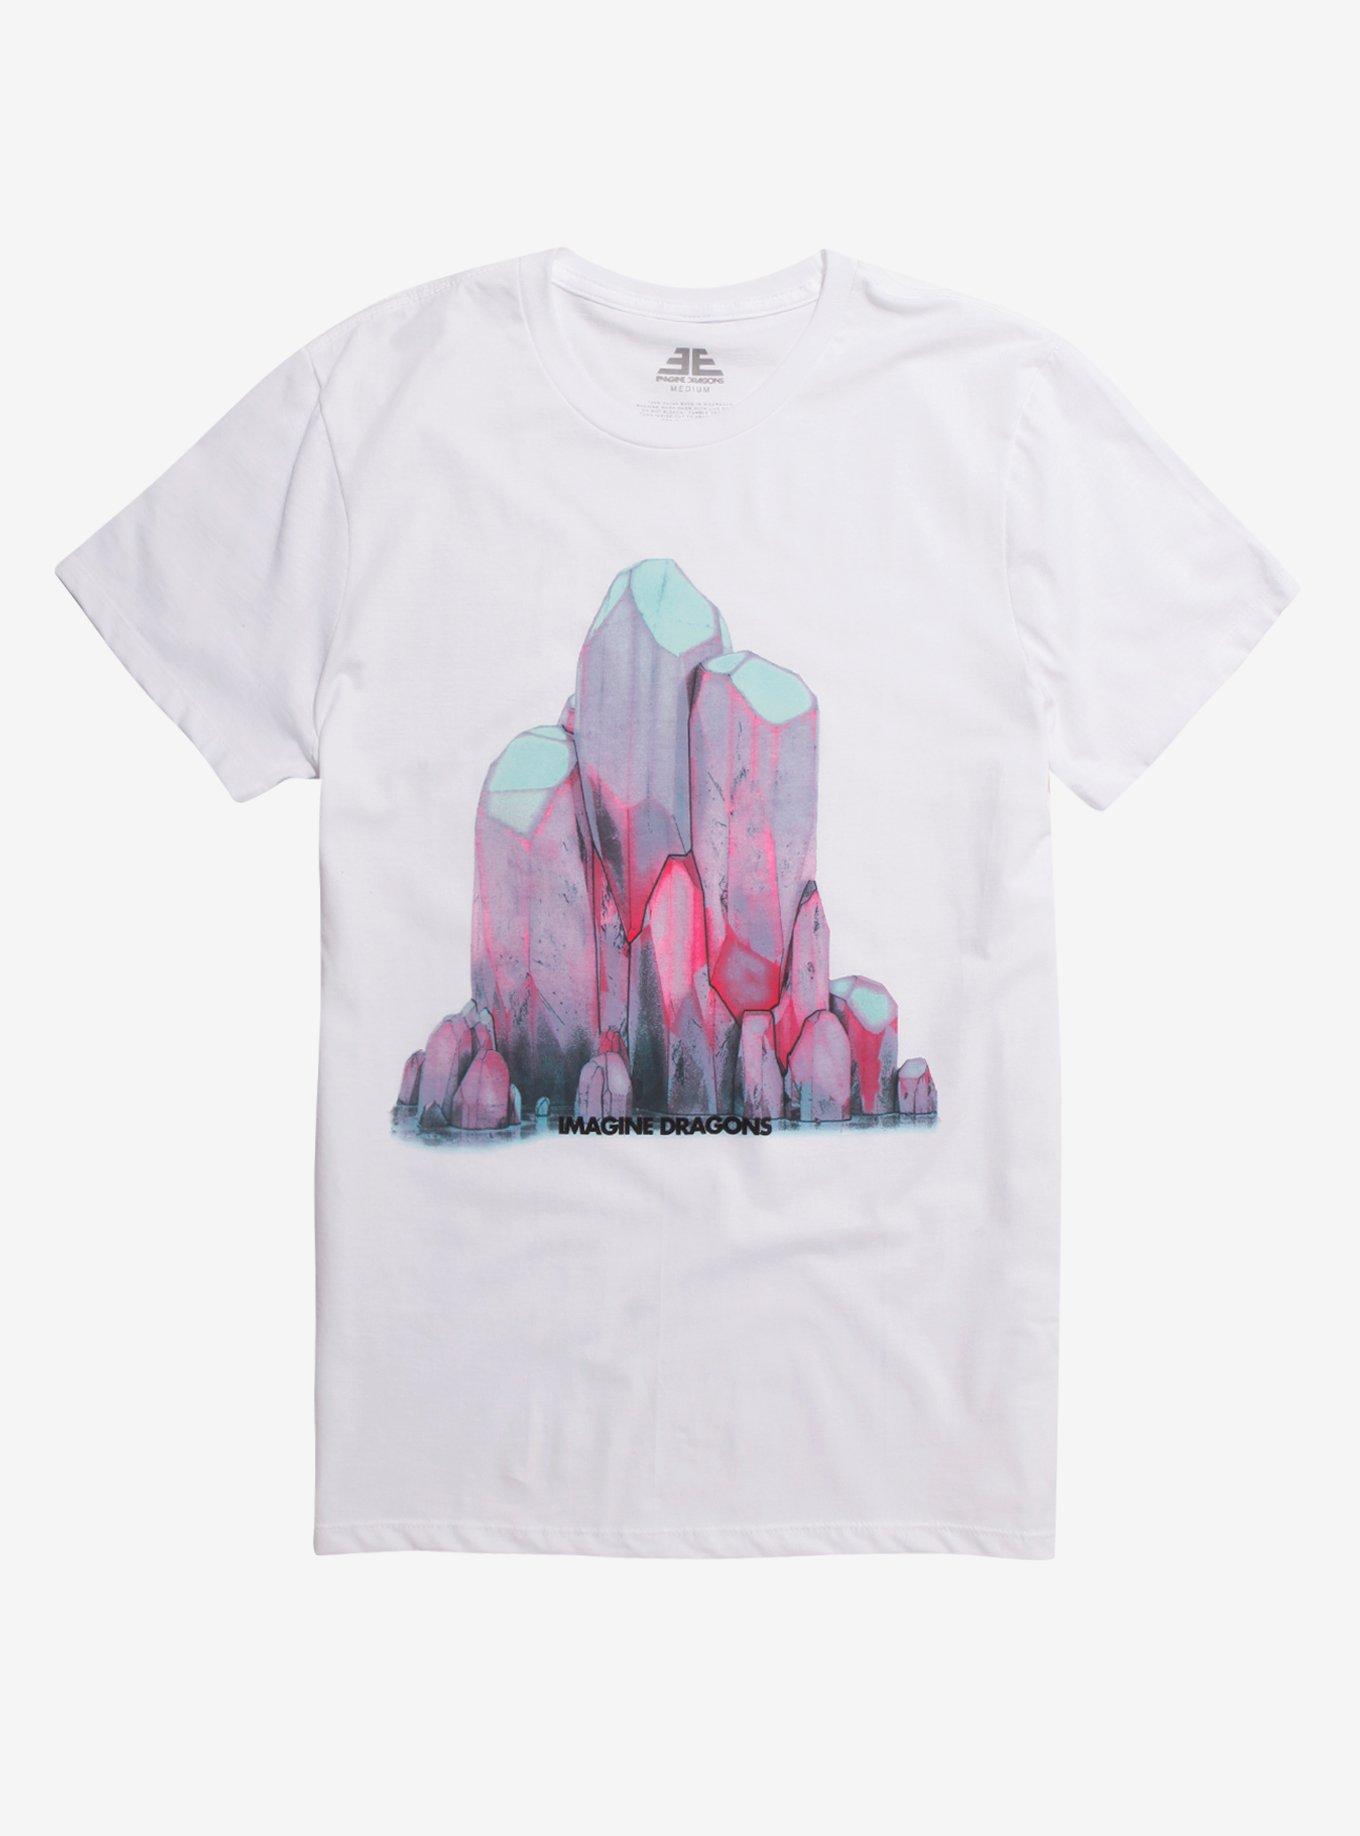 Imagine Dragons Crystals T-Shirt, WHITE, hi-res